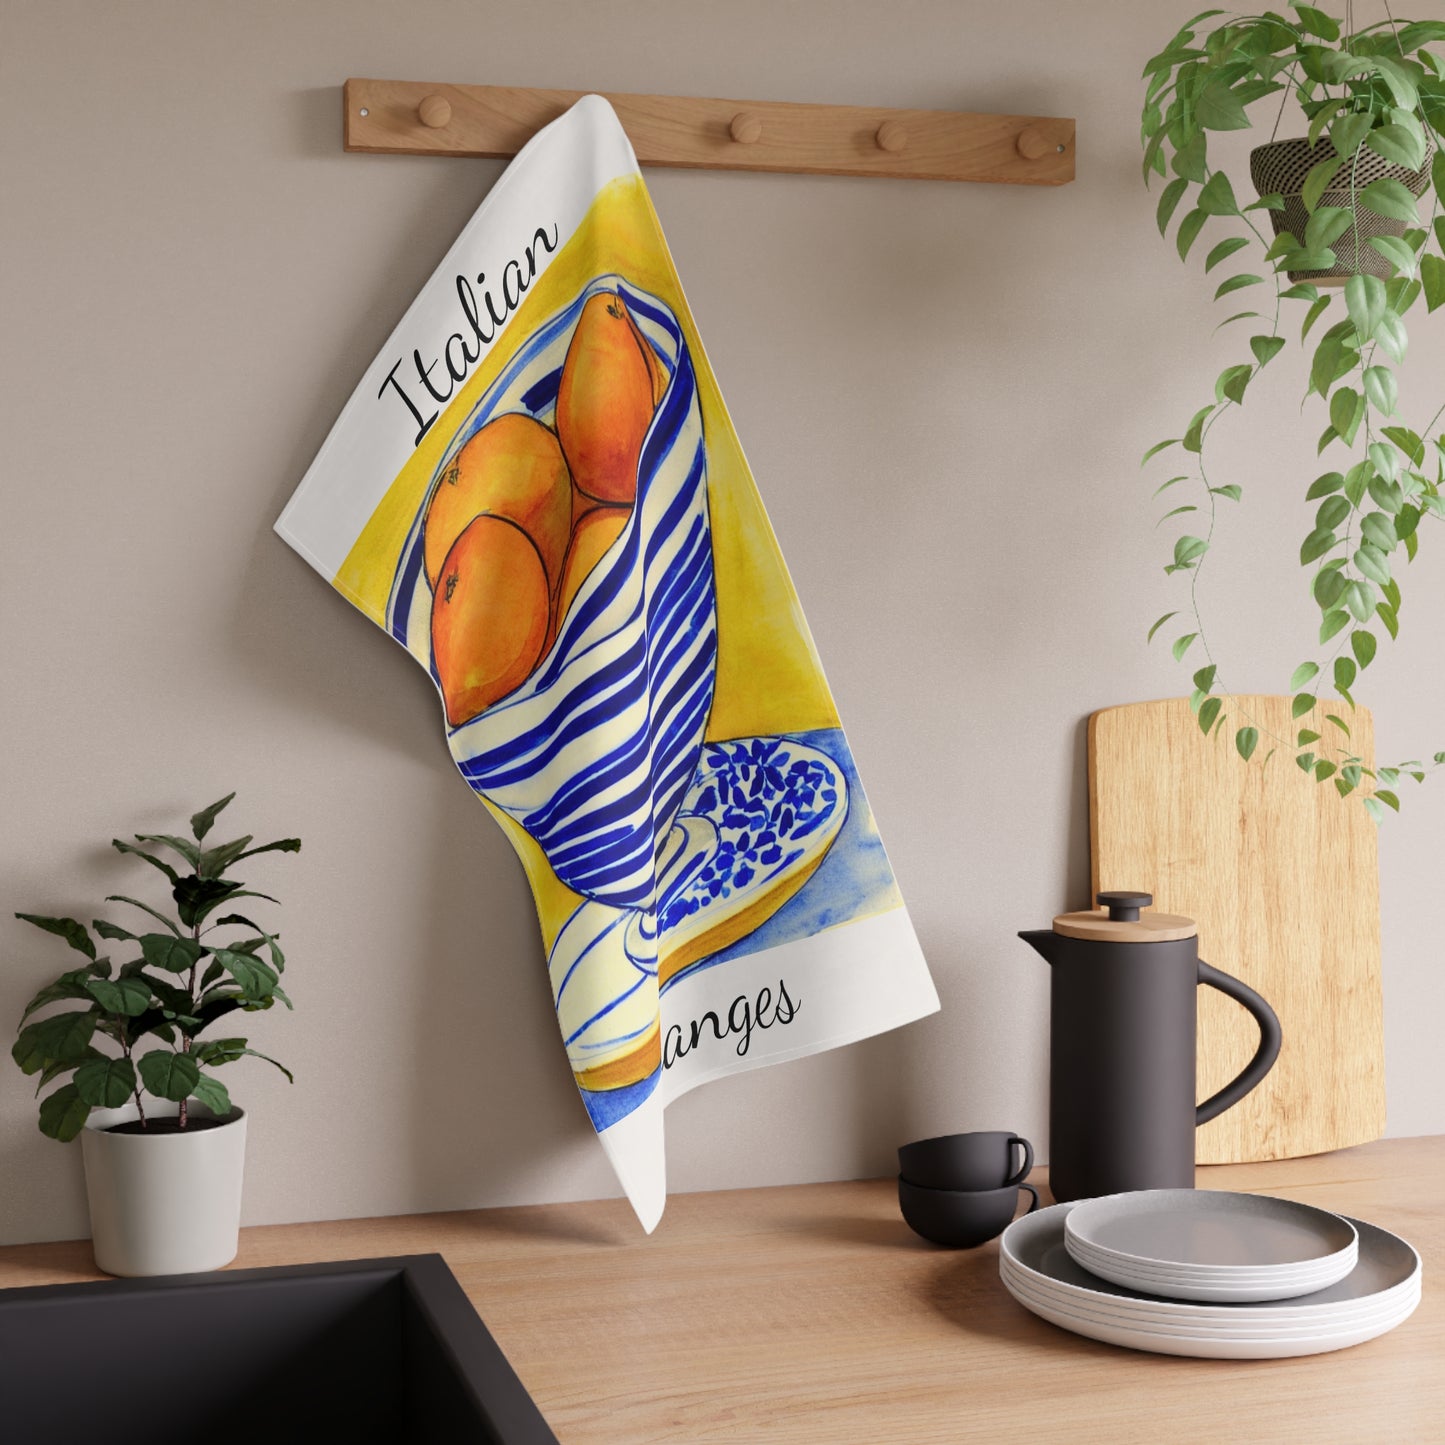 Summer Italian Oranges Watercolor Blue and White Bowl Decorative Kitchen Tea Towel/Bar Towel